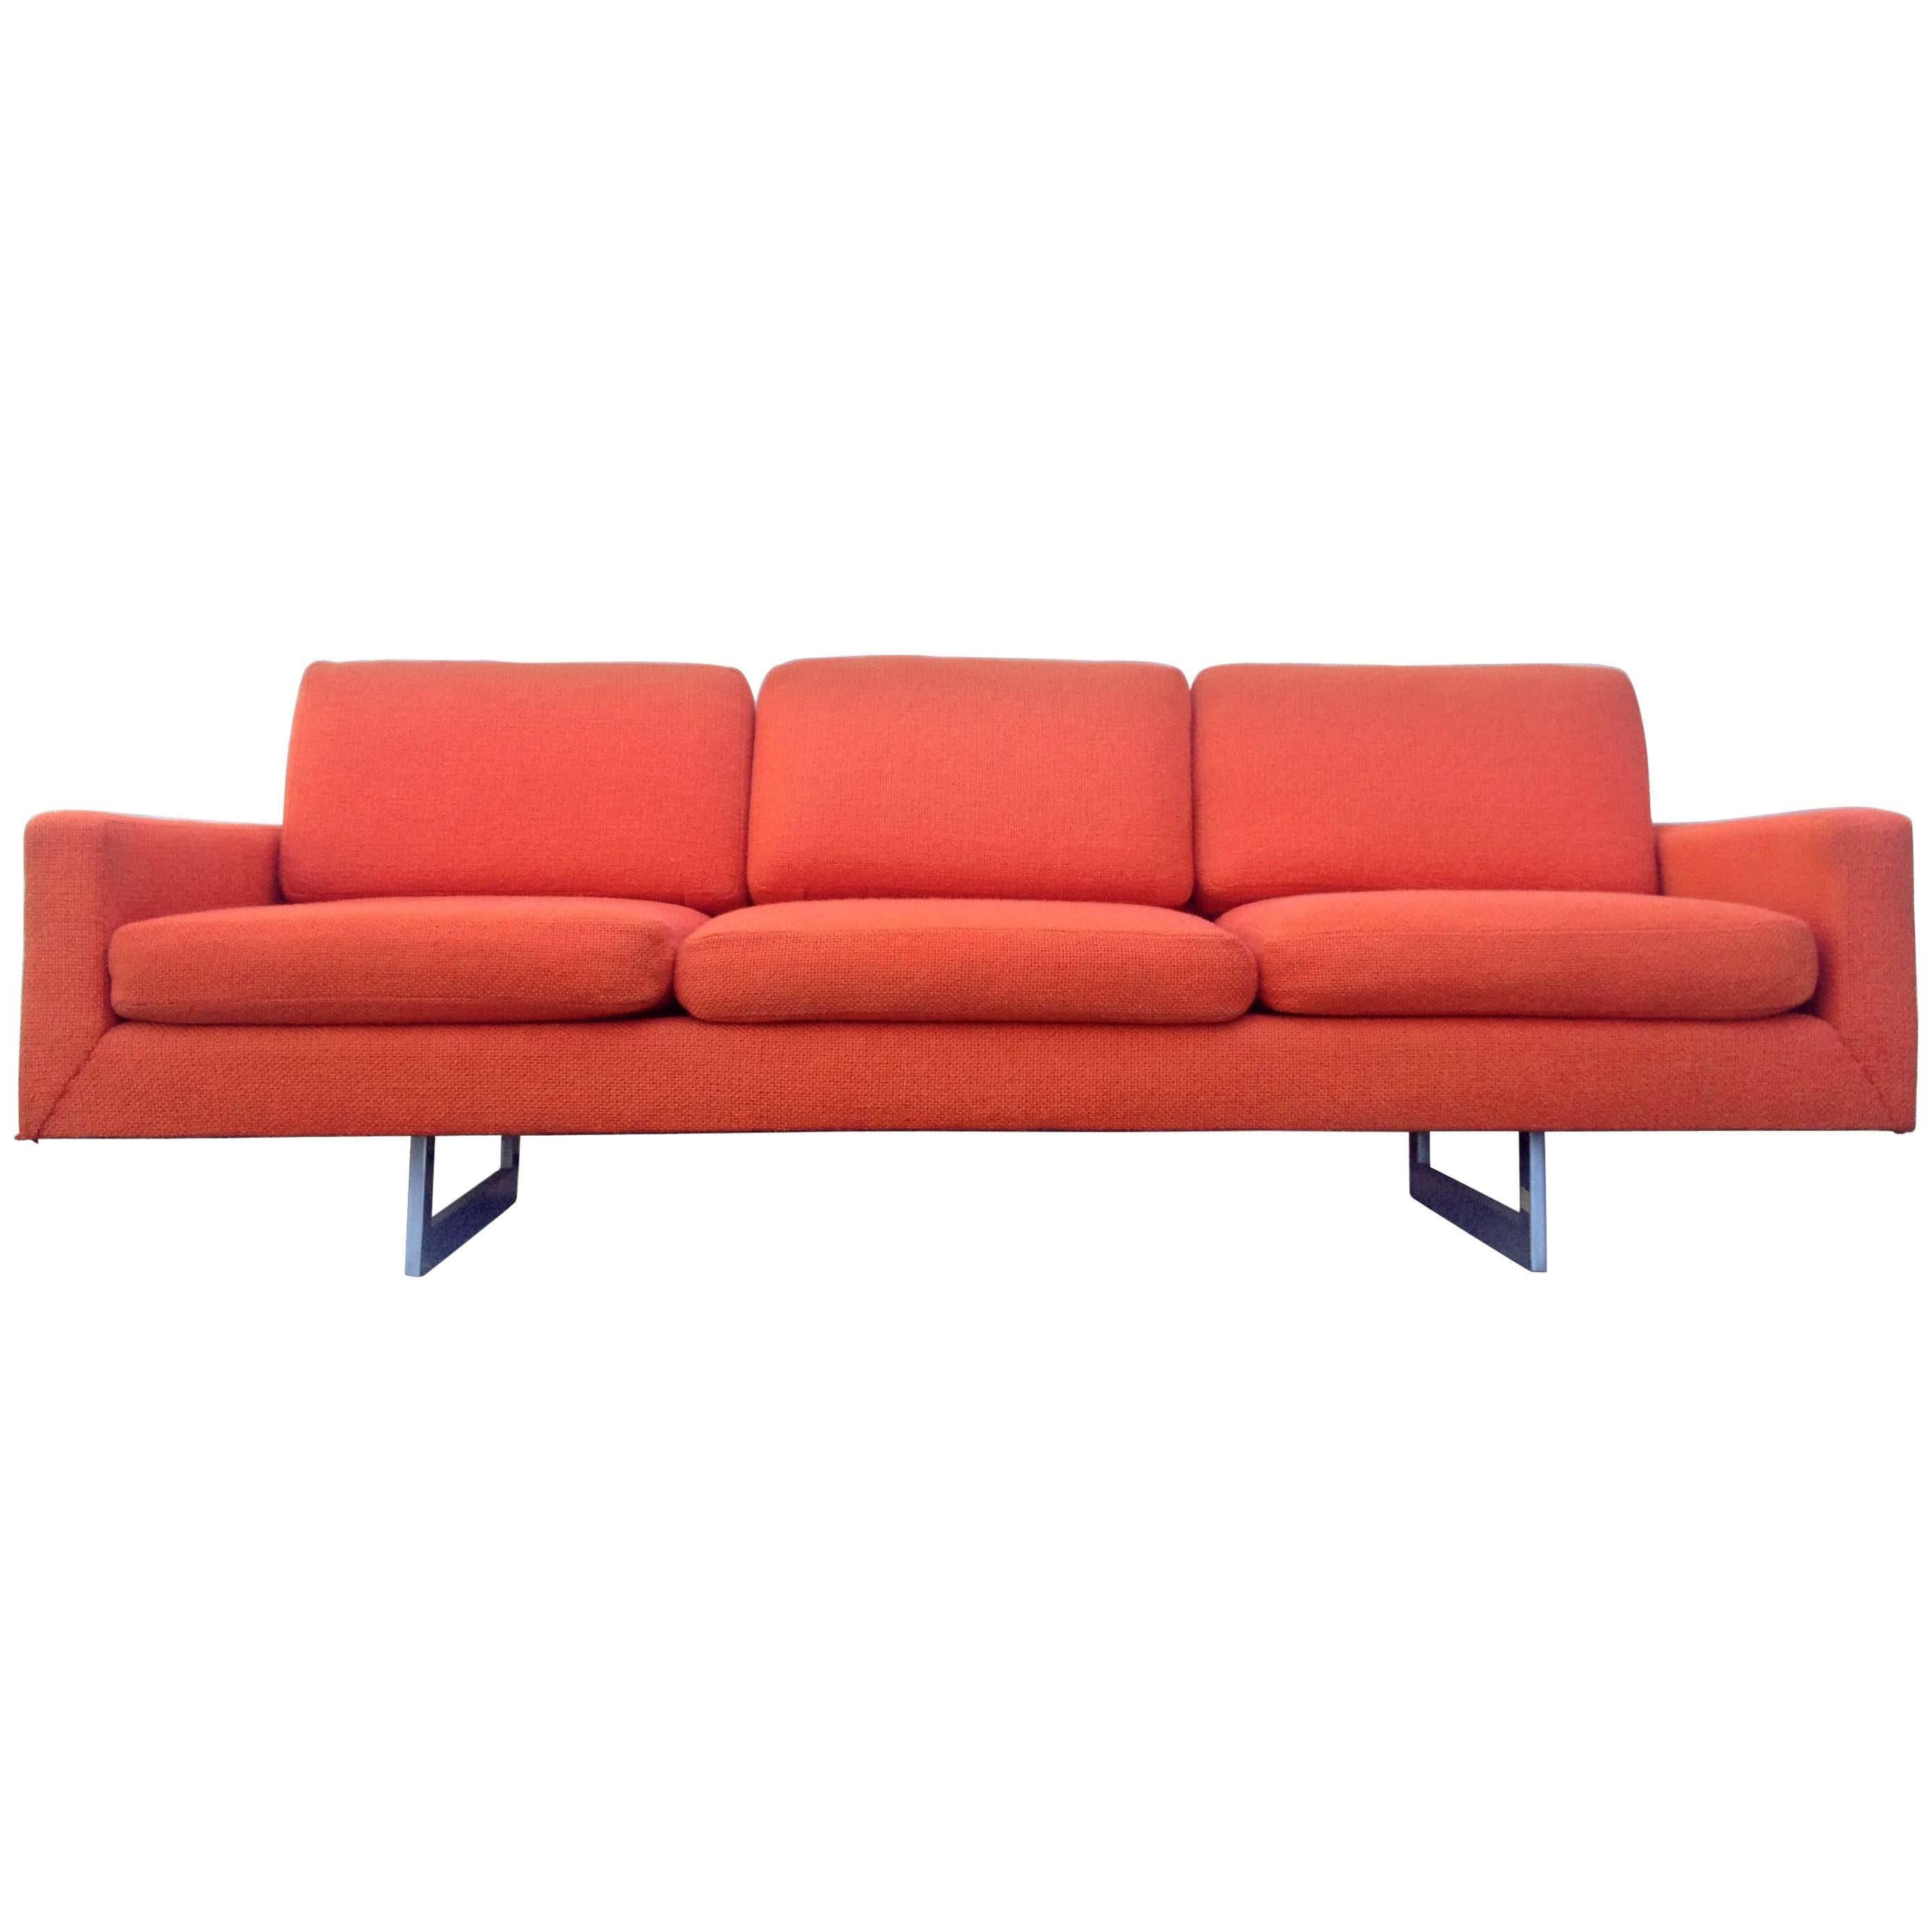 Bright Orange Architectural Mid-Century Modern Sofa